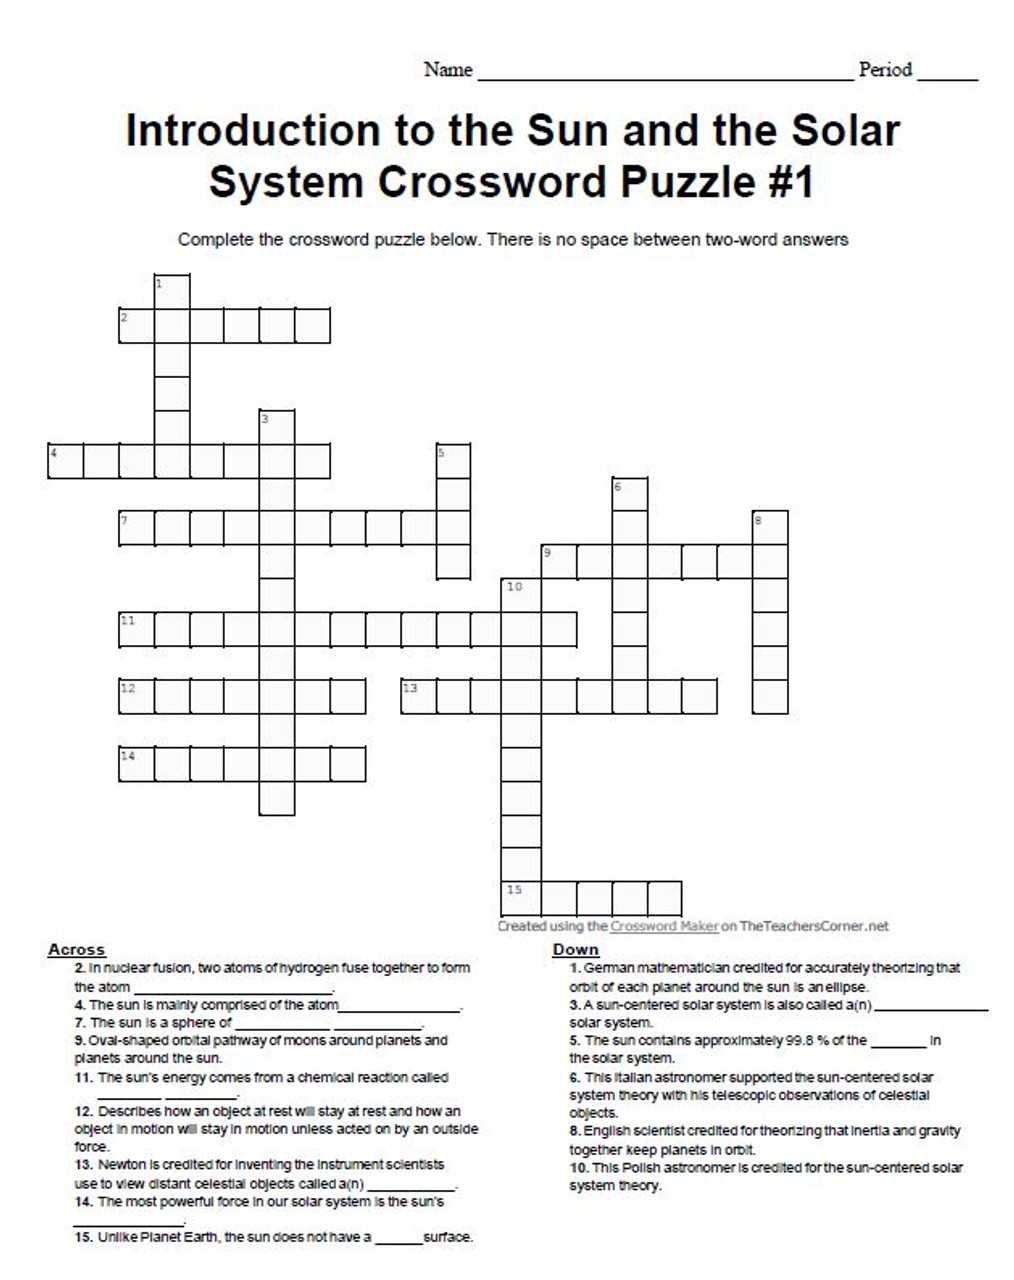 fuse word crossword puzzle clue helpsafetysirengasdetector